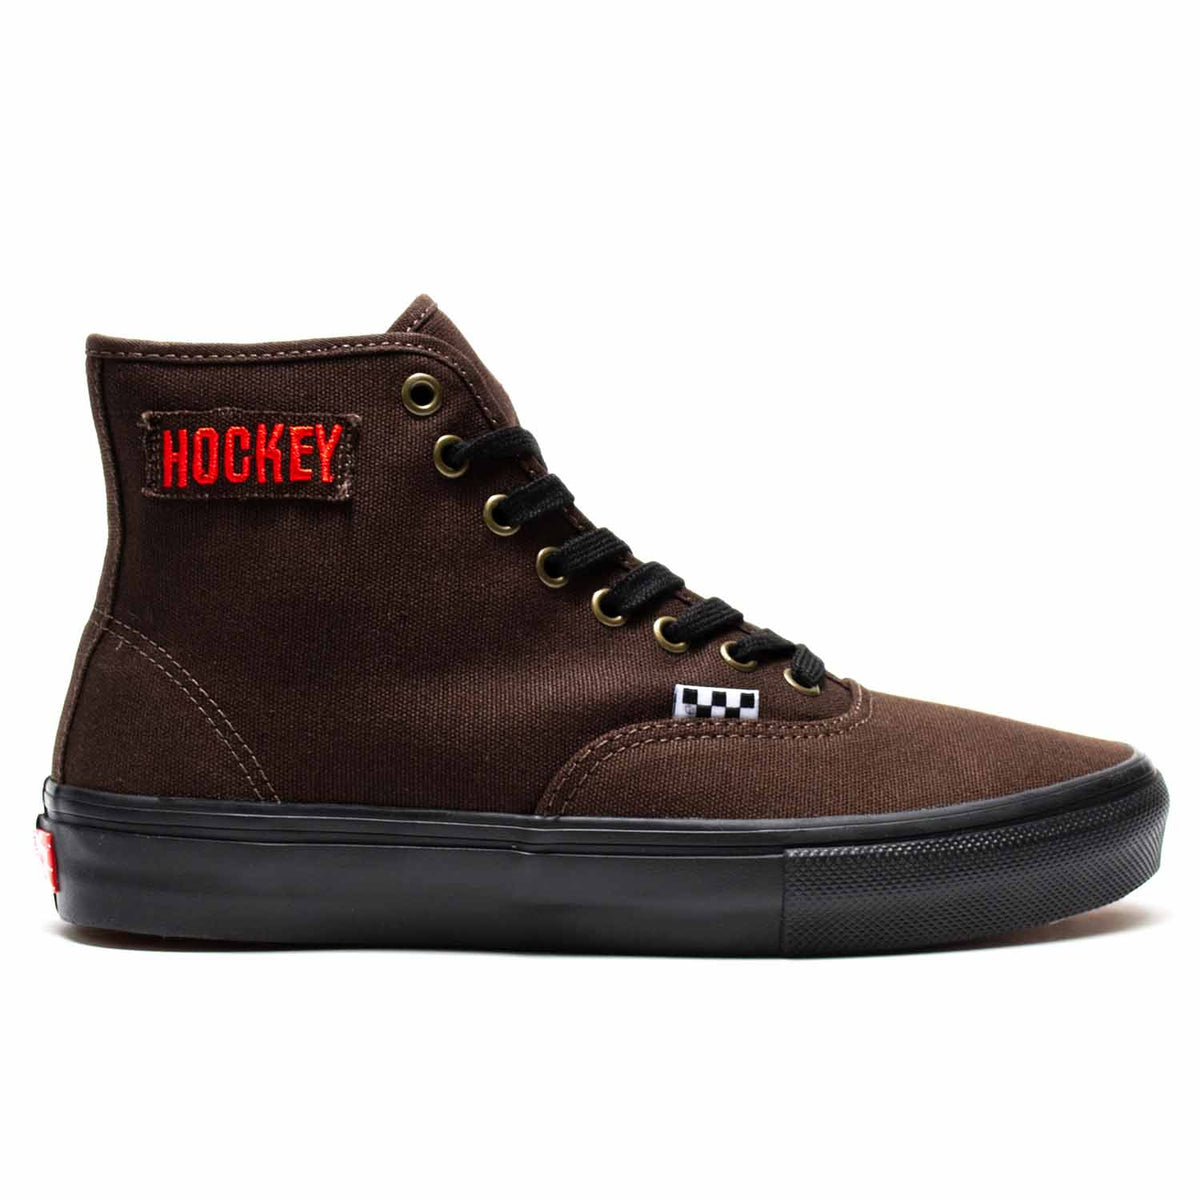 Vans - Skate Authentic High x Hockey Skateboards - Brown